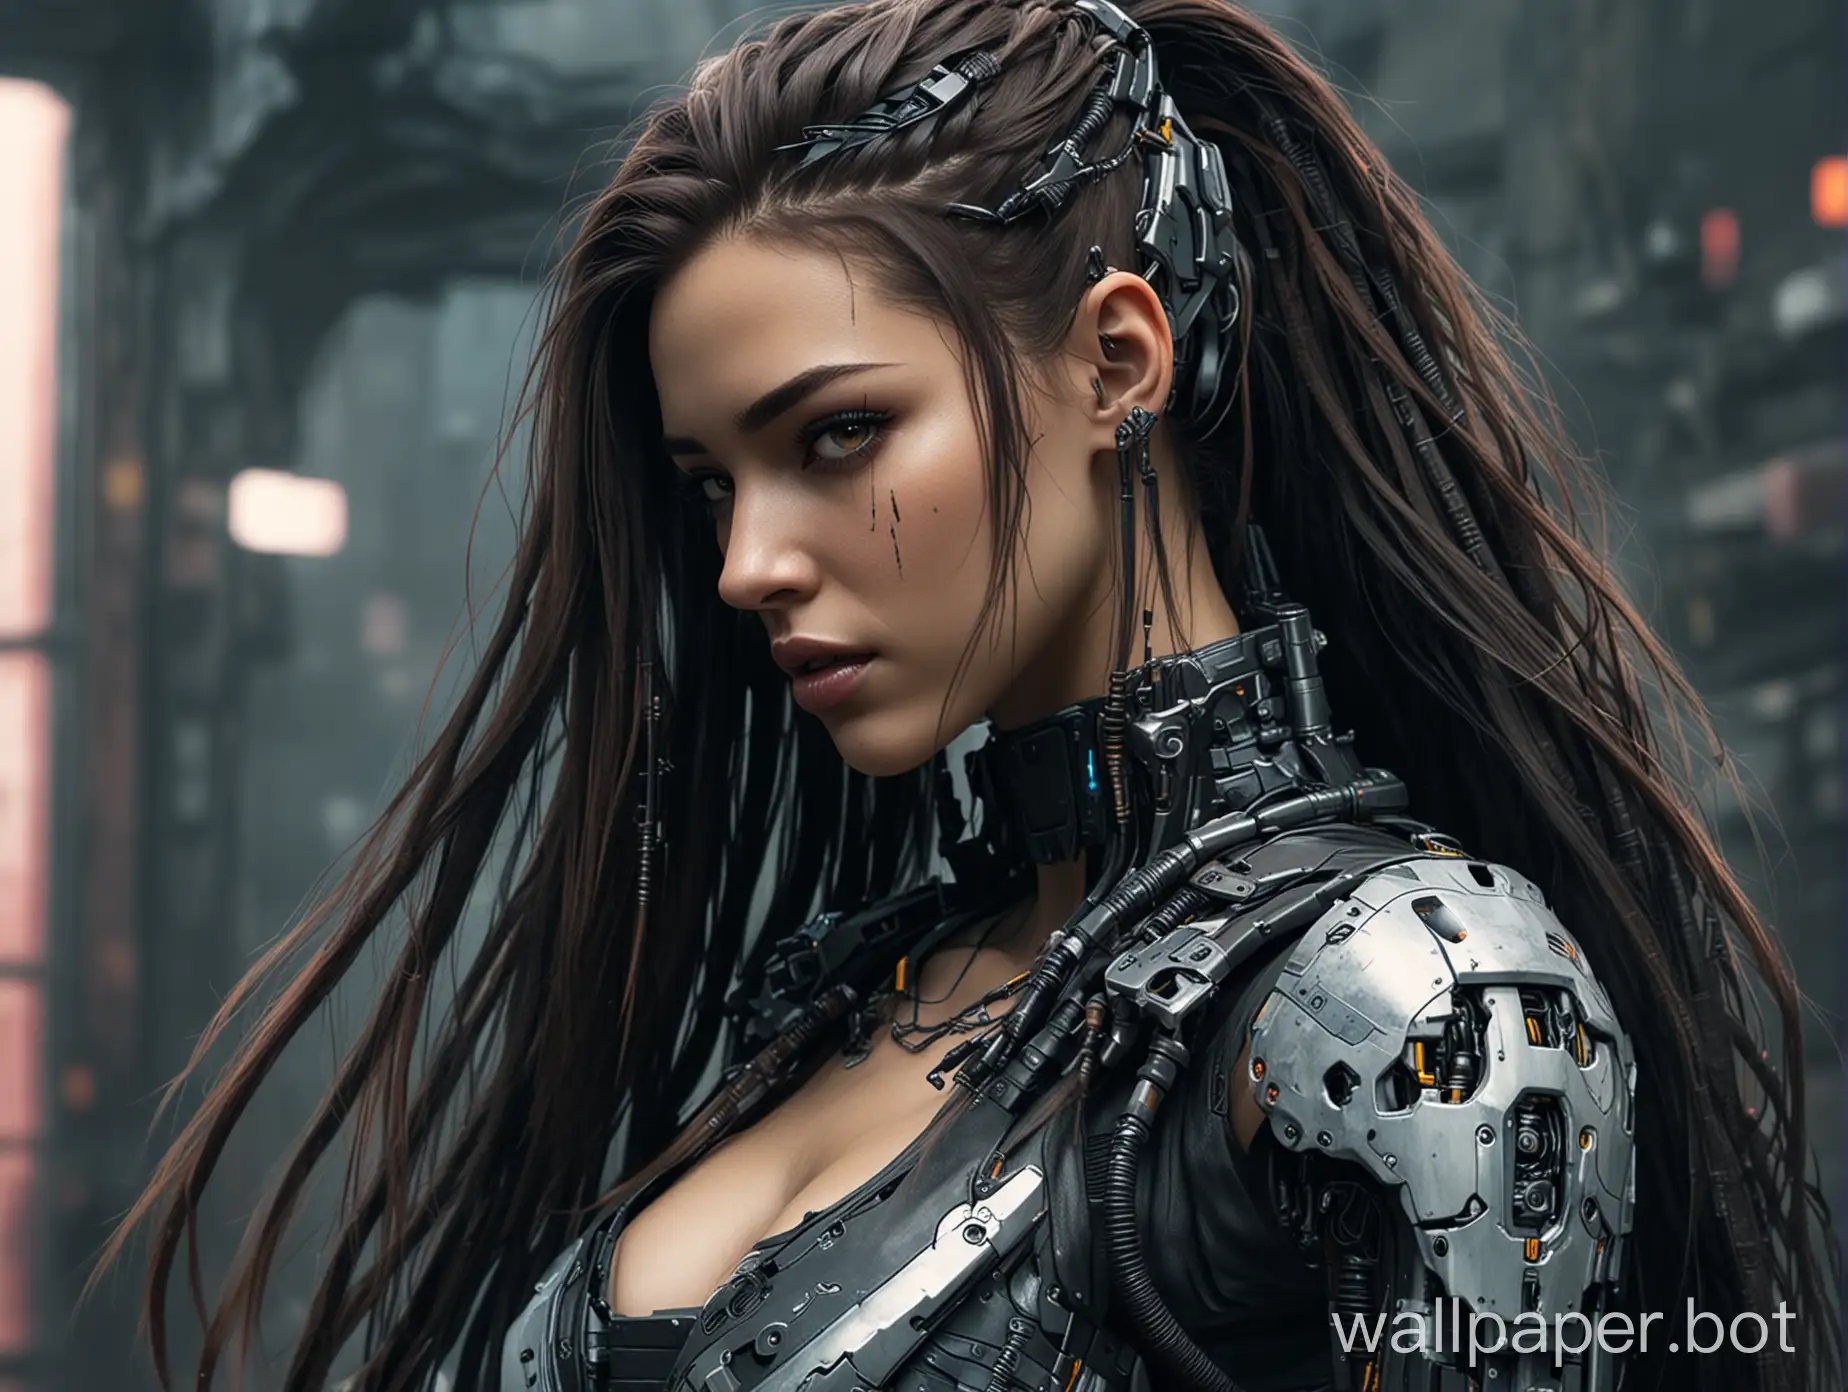 Futuristic-Cyberpunk-Woman-with-Long-Hair